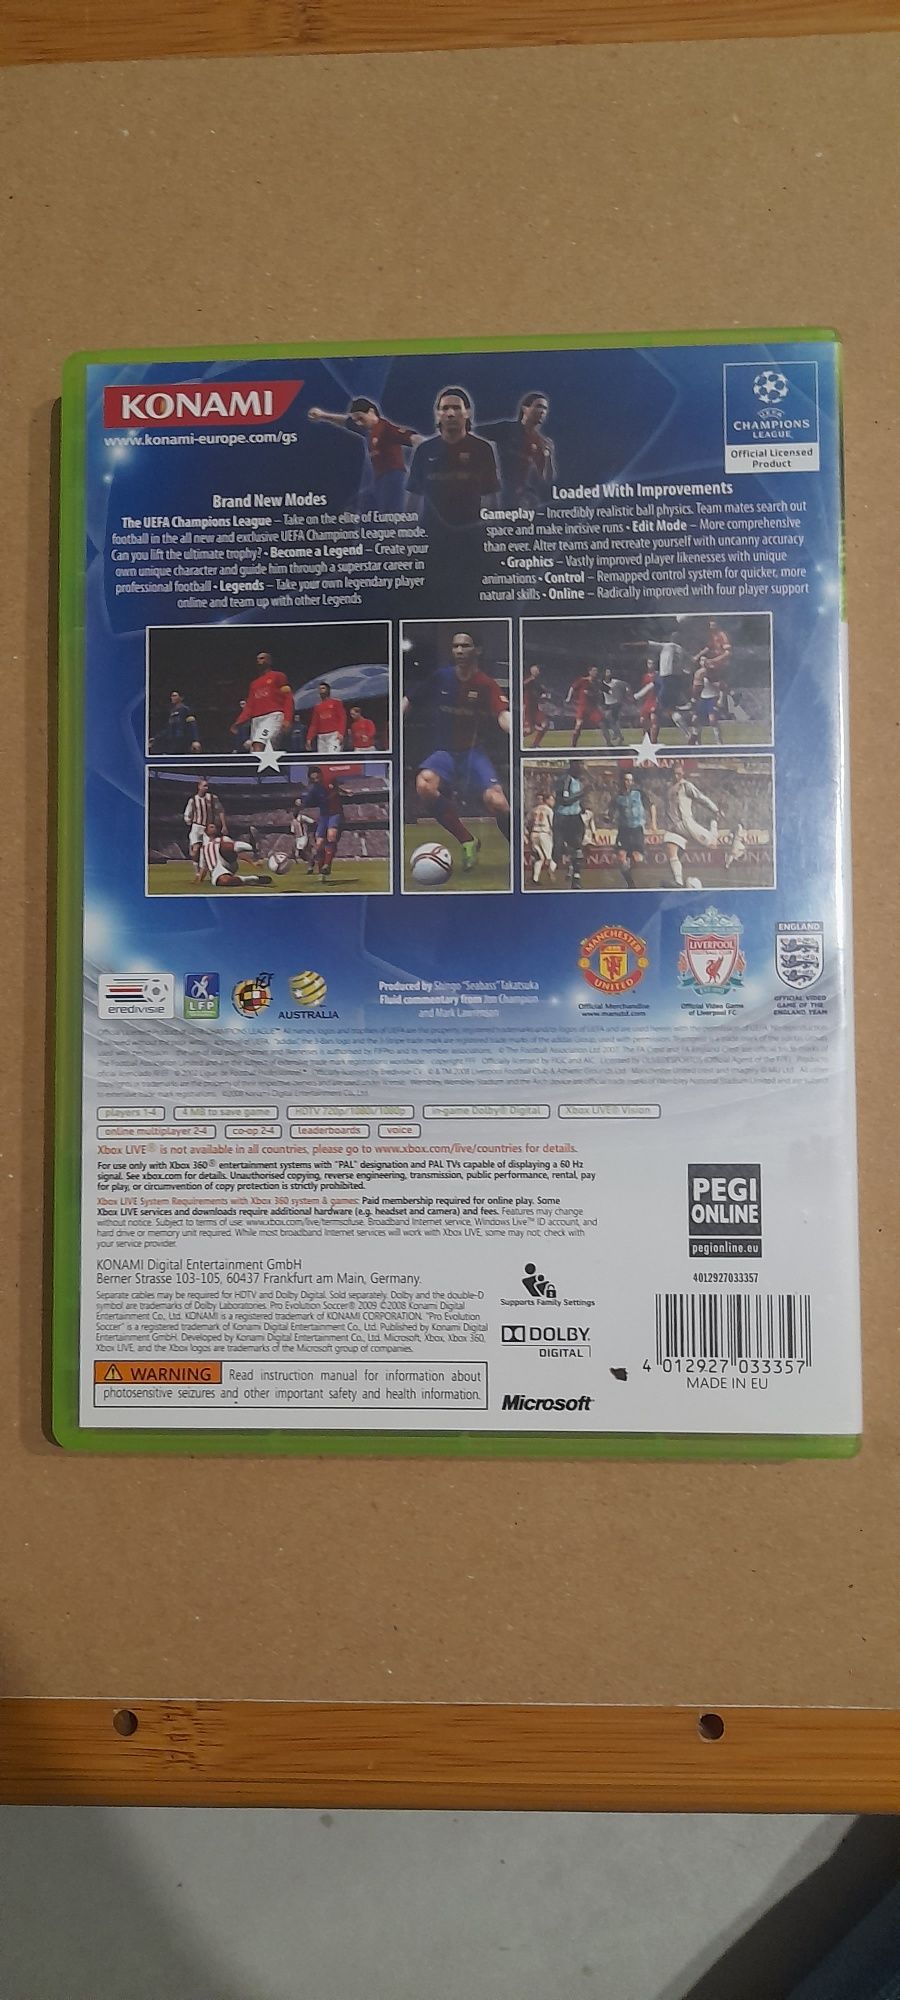 Gra Pro Evolution Soccer 2009 XBOX360